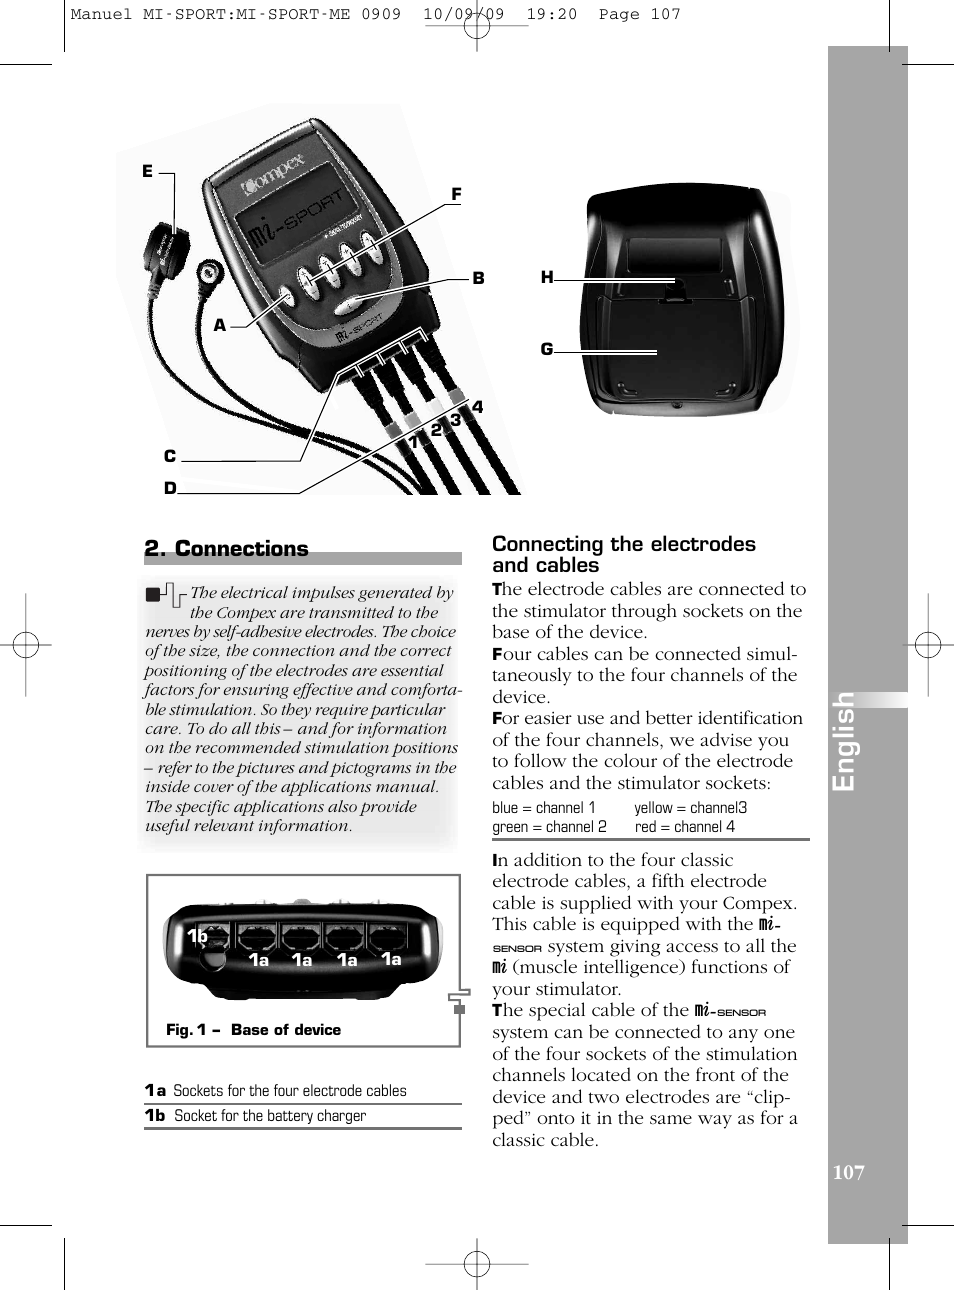 En g li s h | Compex mi-Sport User Manual | Page 107 / 176